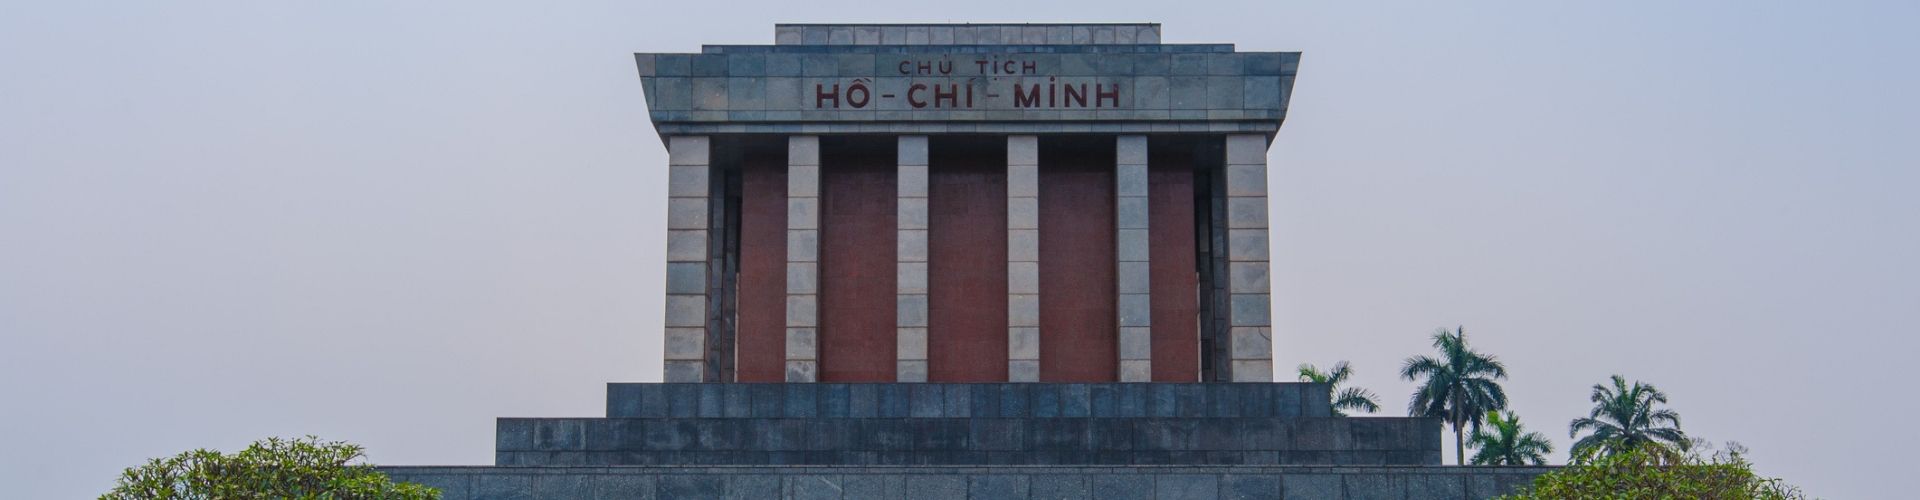 Vietnam War School Trip to Ho Chi Minh